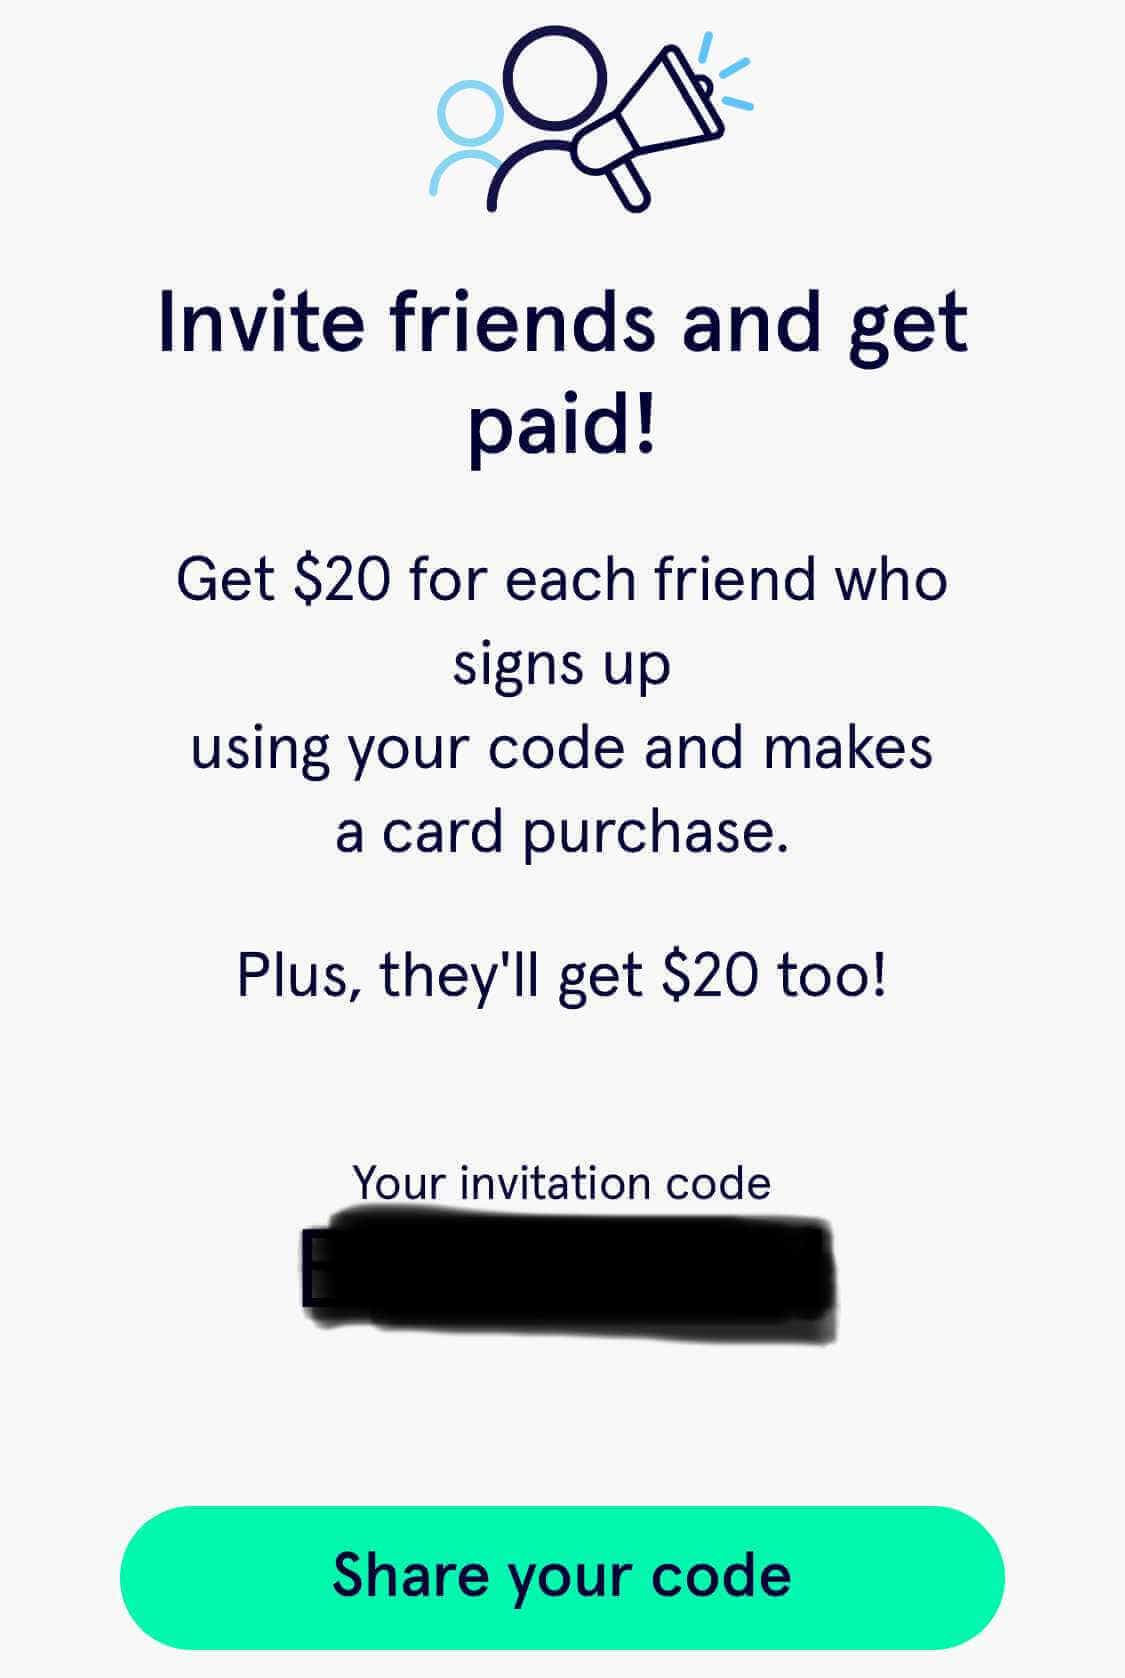 86 400 Refer a Friend cash offer on mobile